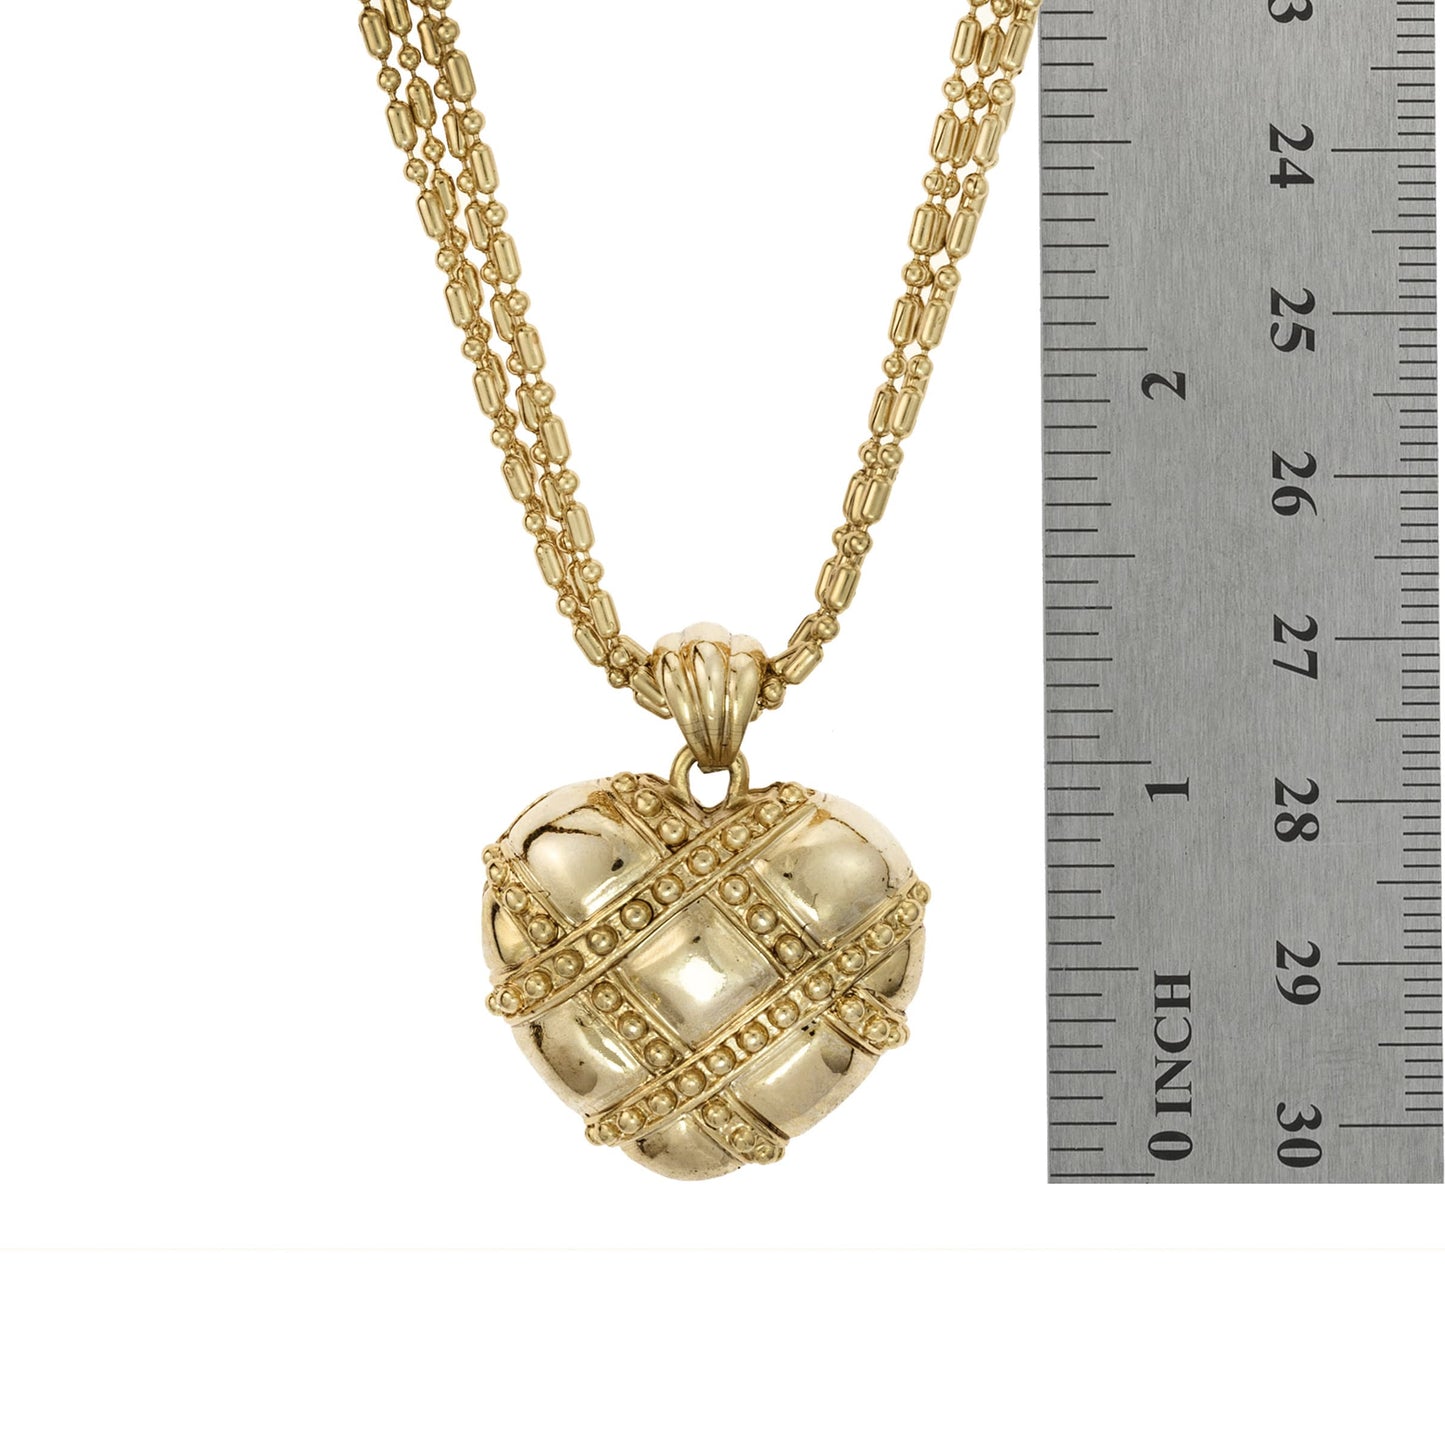 A Vintage Oscar De La Renta 24 Inch Gold Tone Heart Pendant Necklace #OSN-4619-W - Limited Stock - Never Worn